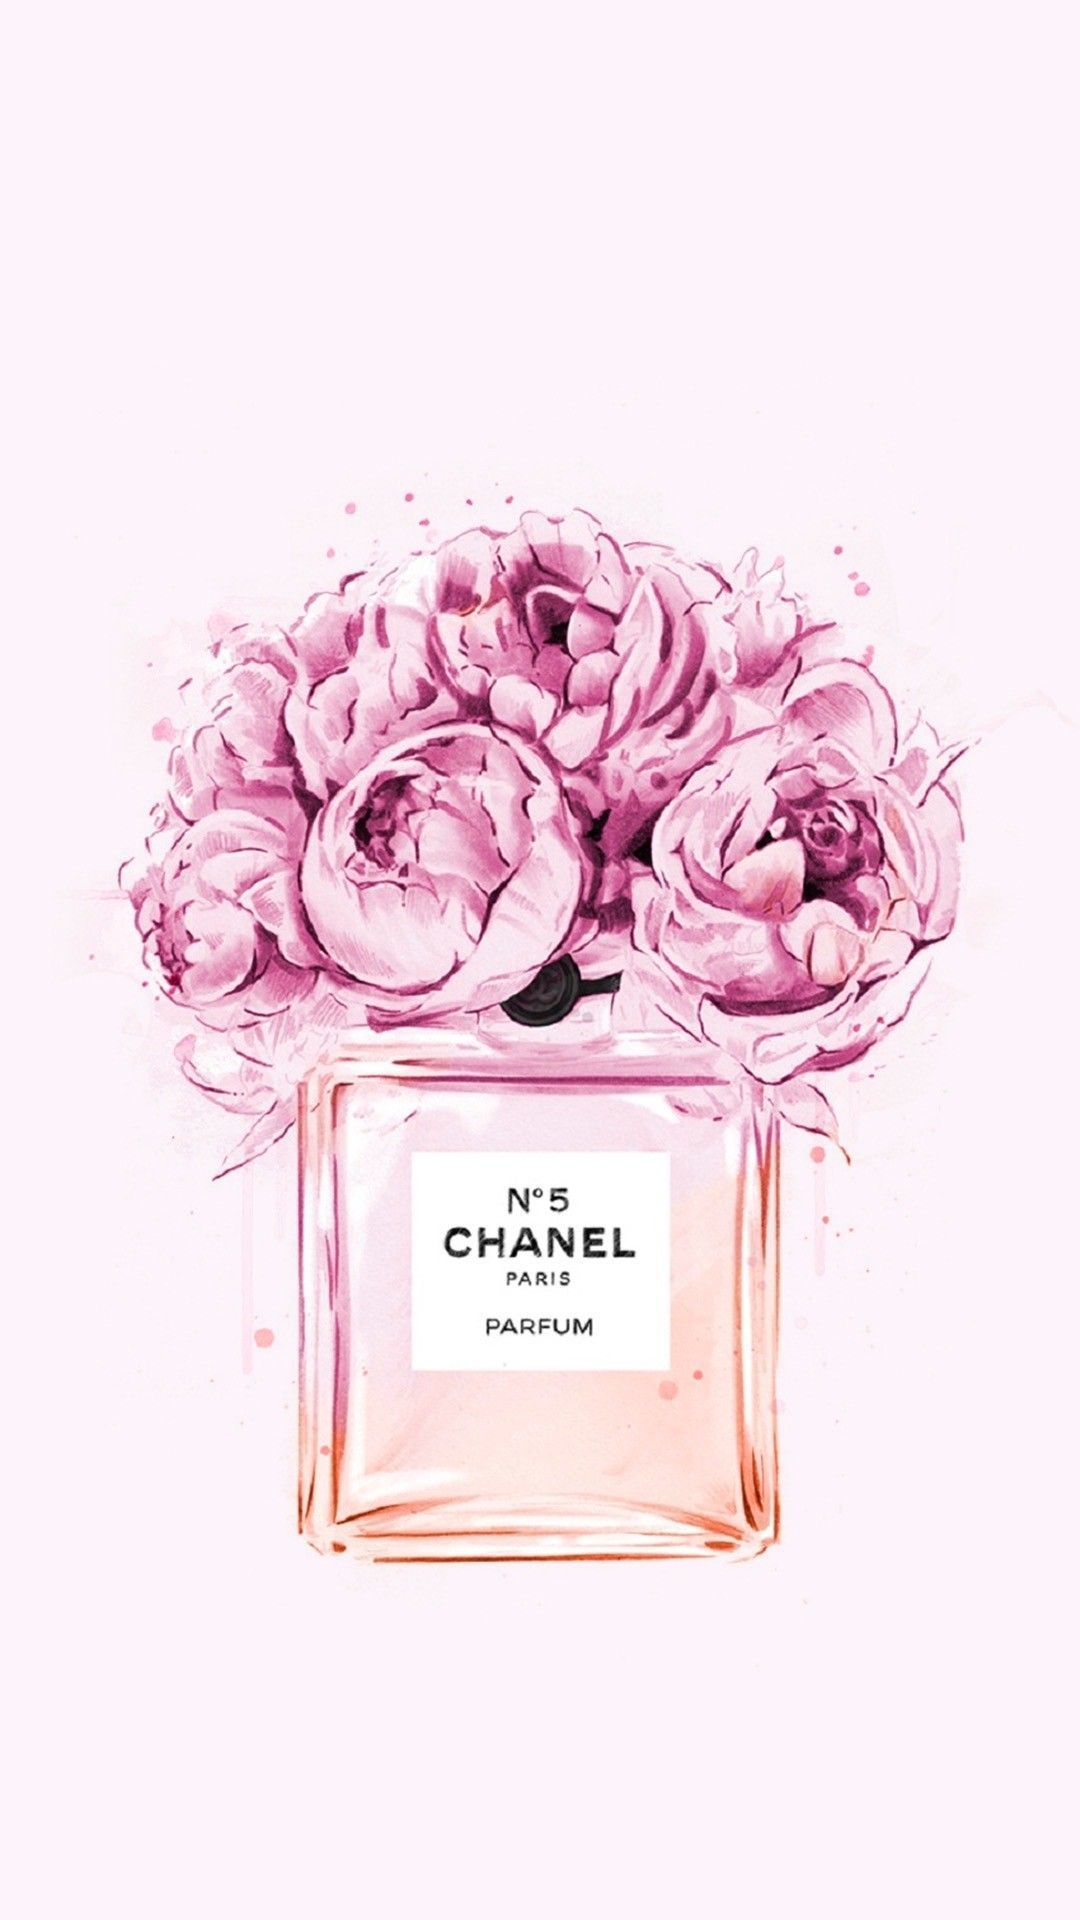 Chanel Logo Wallpaper Pink